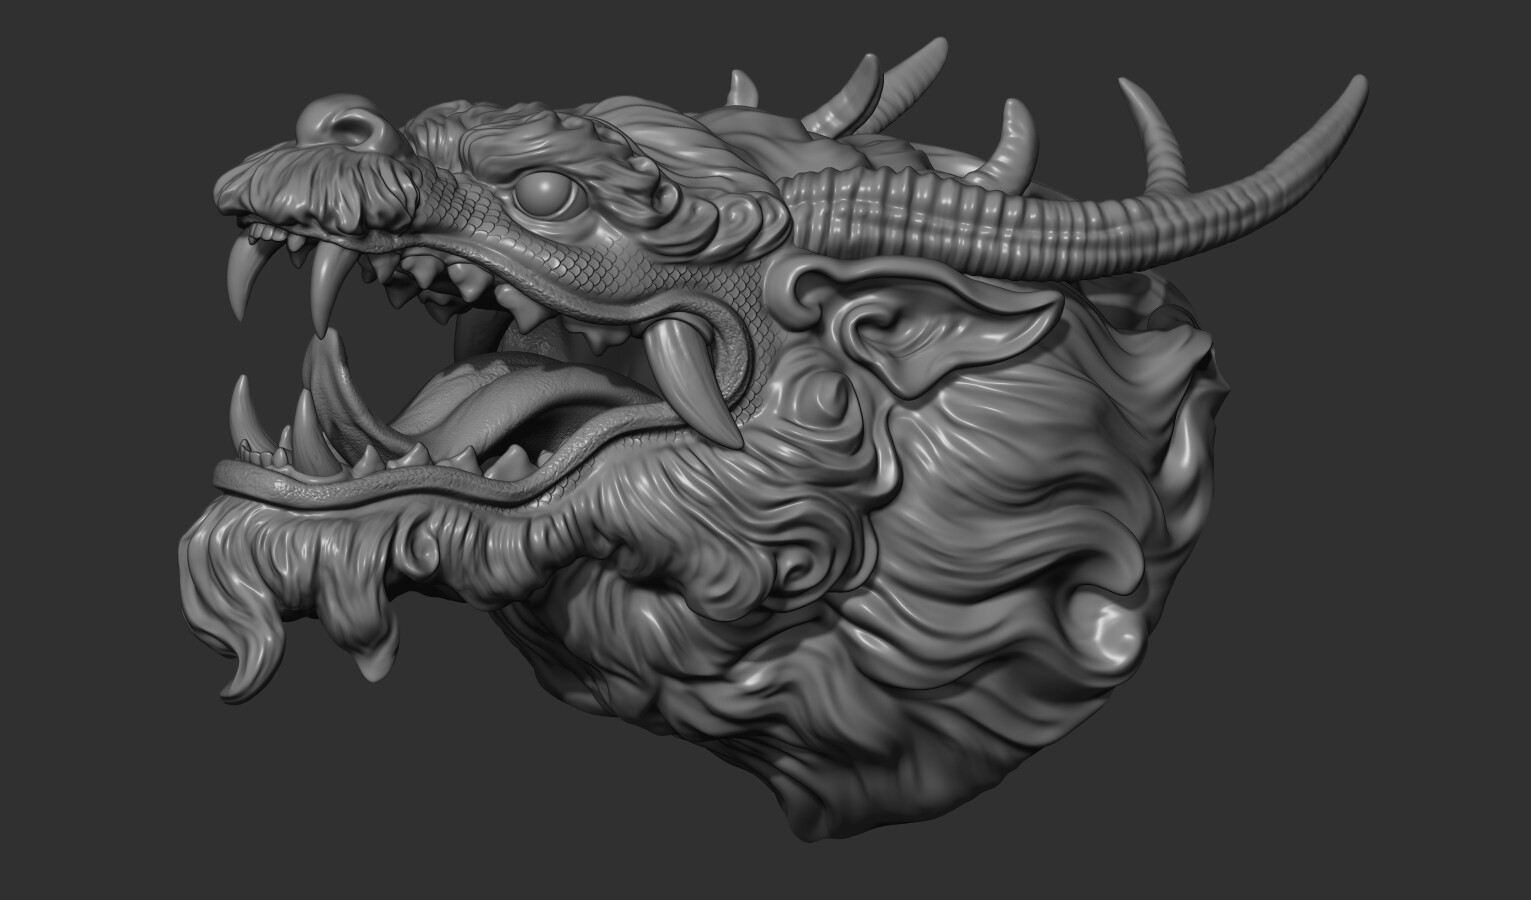 ArtStation - Chinese dragon head | Resources